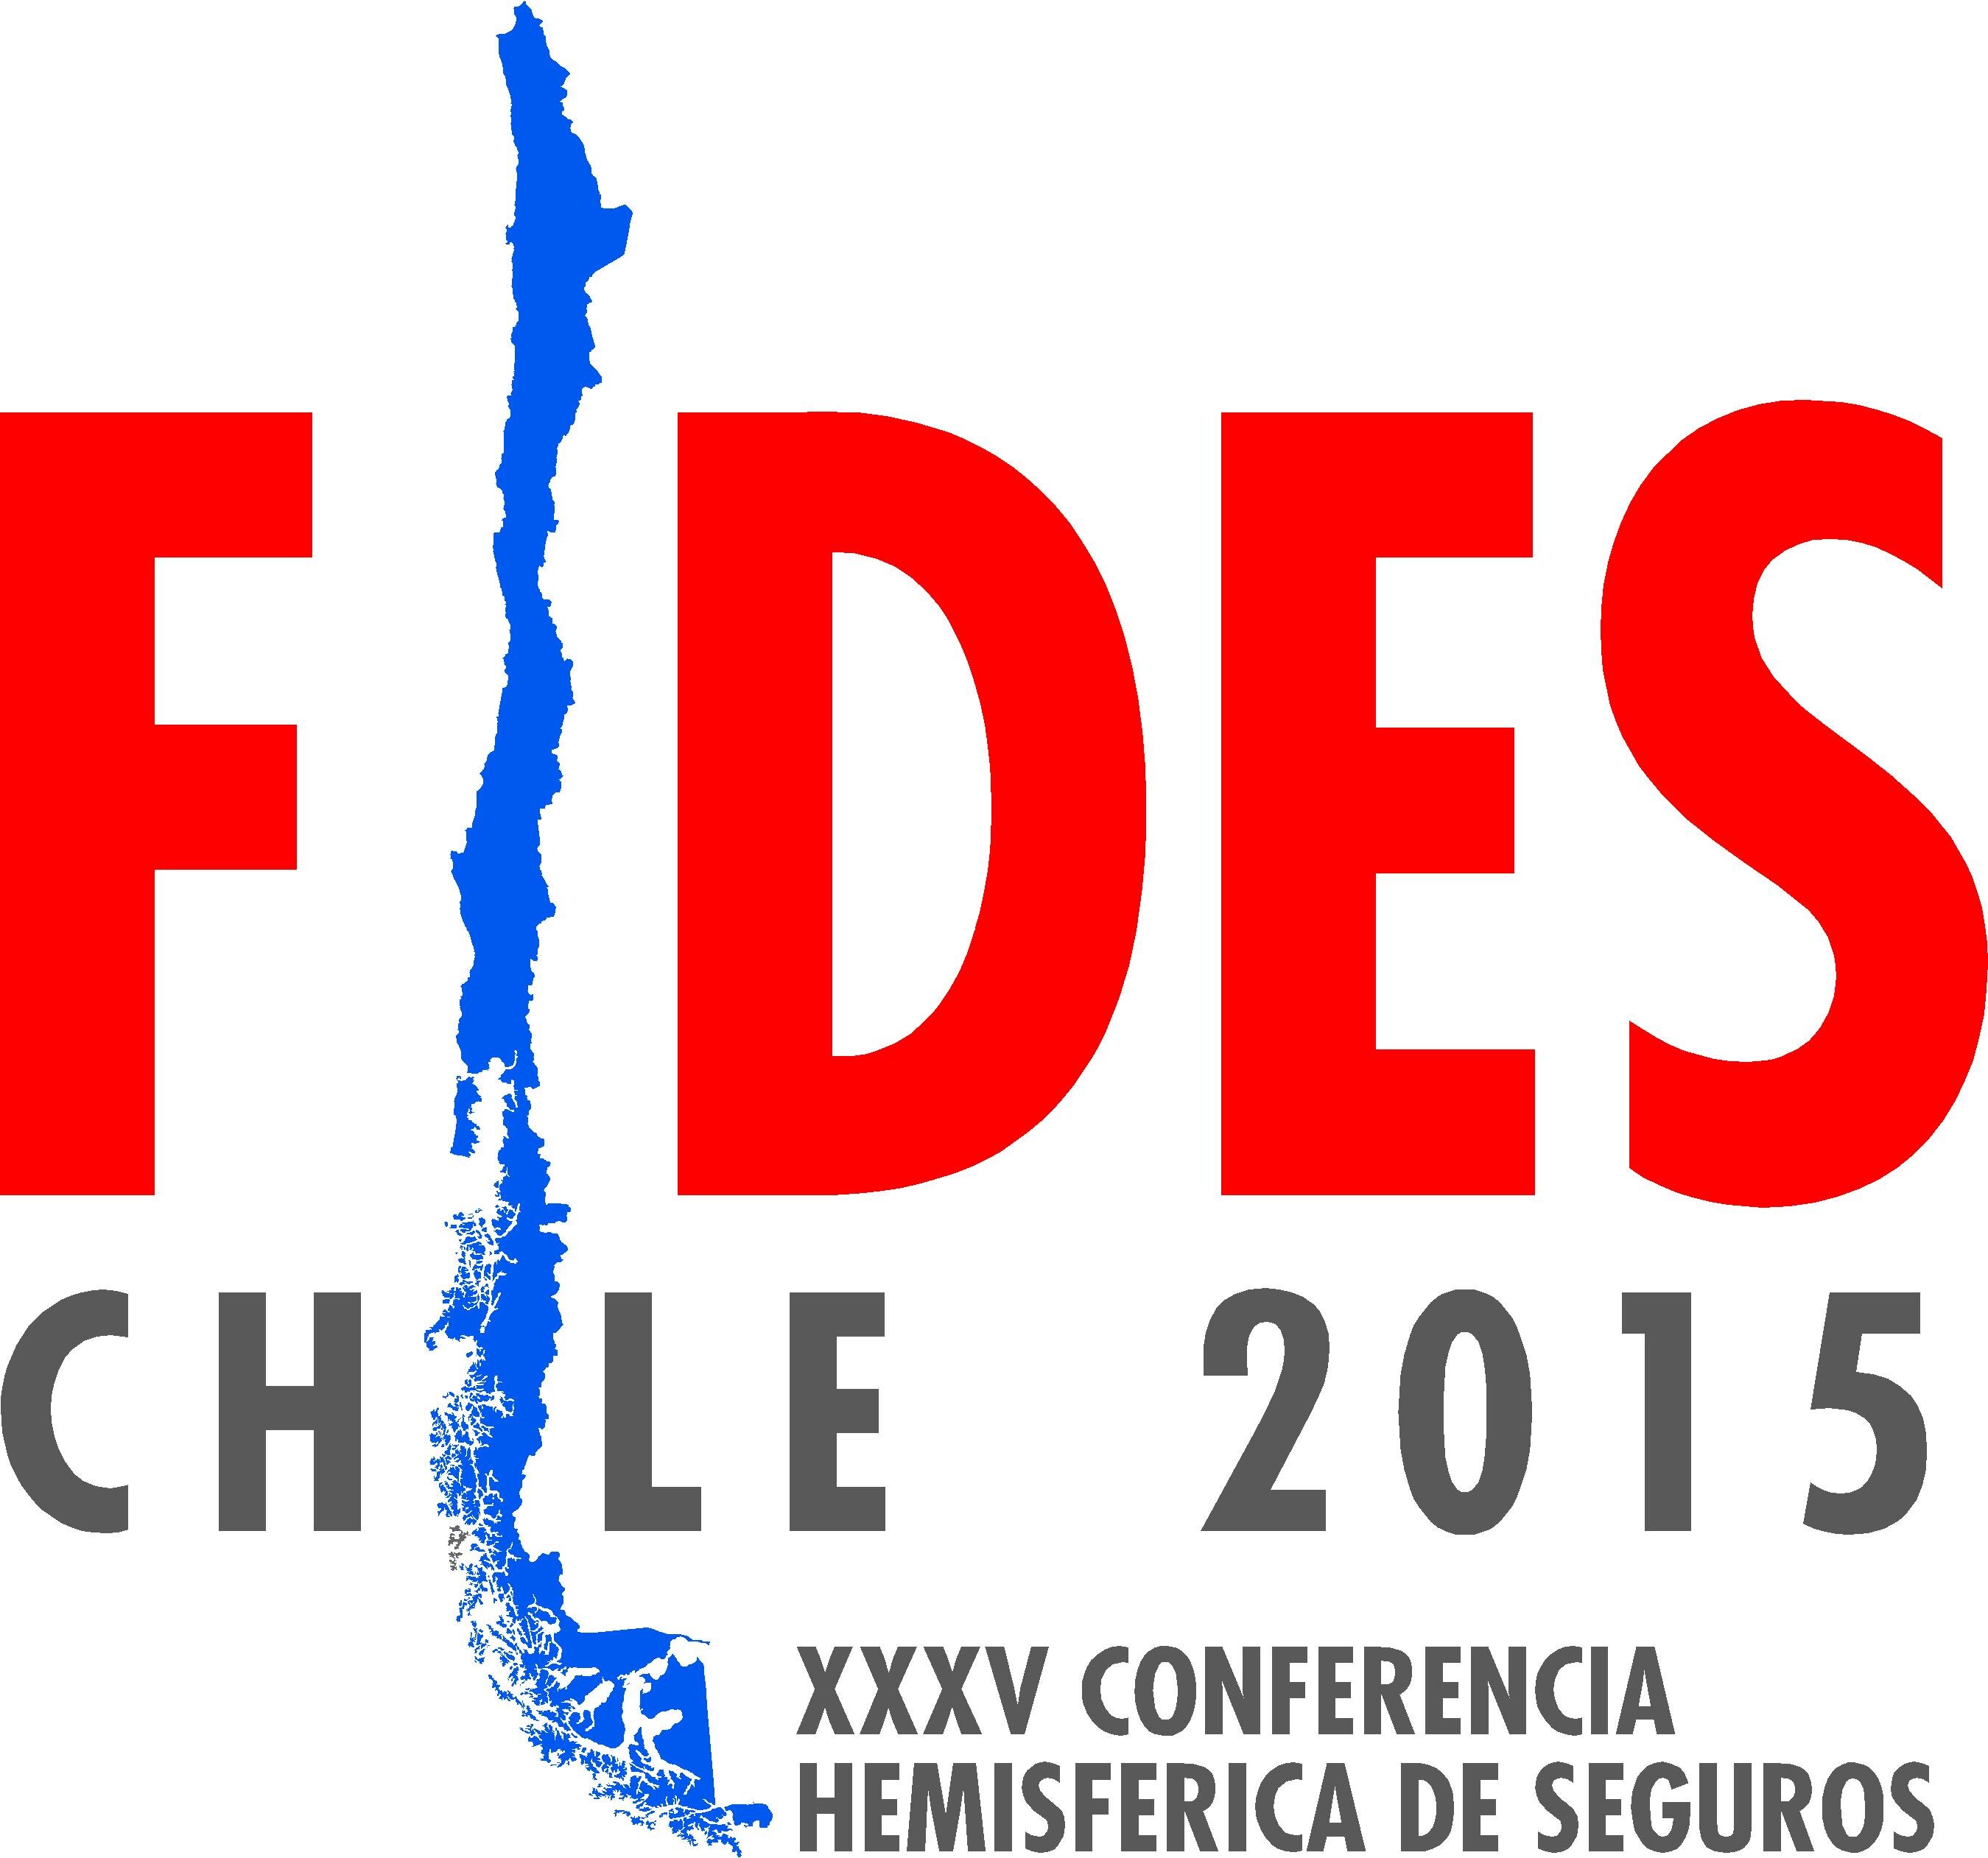 XXXV Conferencia Hemisférica de Seguros, FIDES 2015. https://t.co/5y3IoFieSW #fides2015